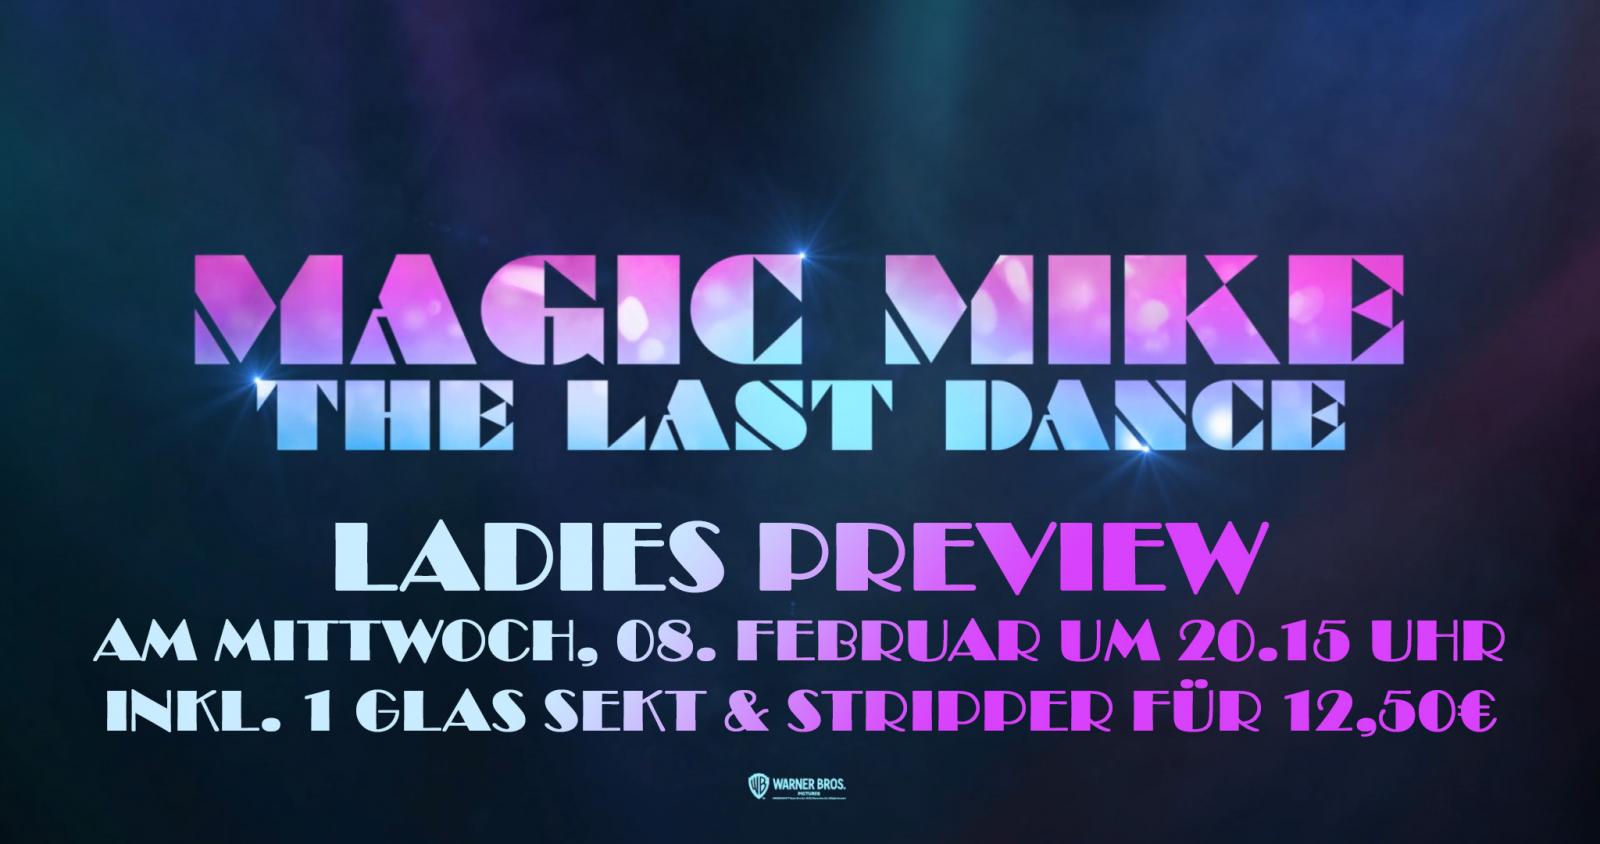 Ladies Preview Magic Mike's Last Dance